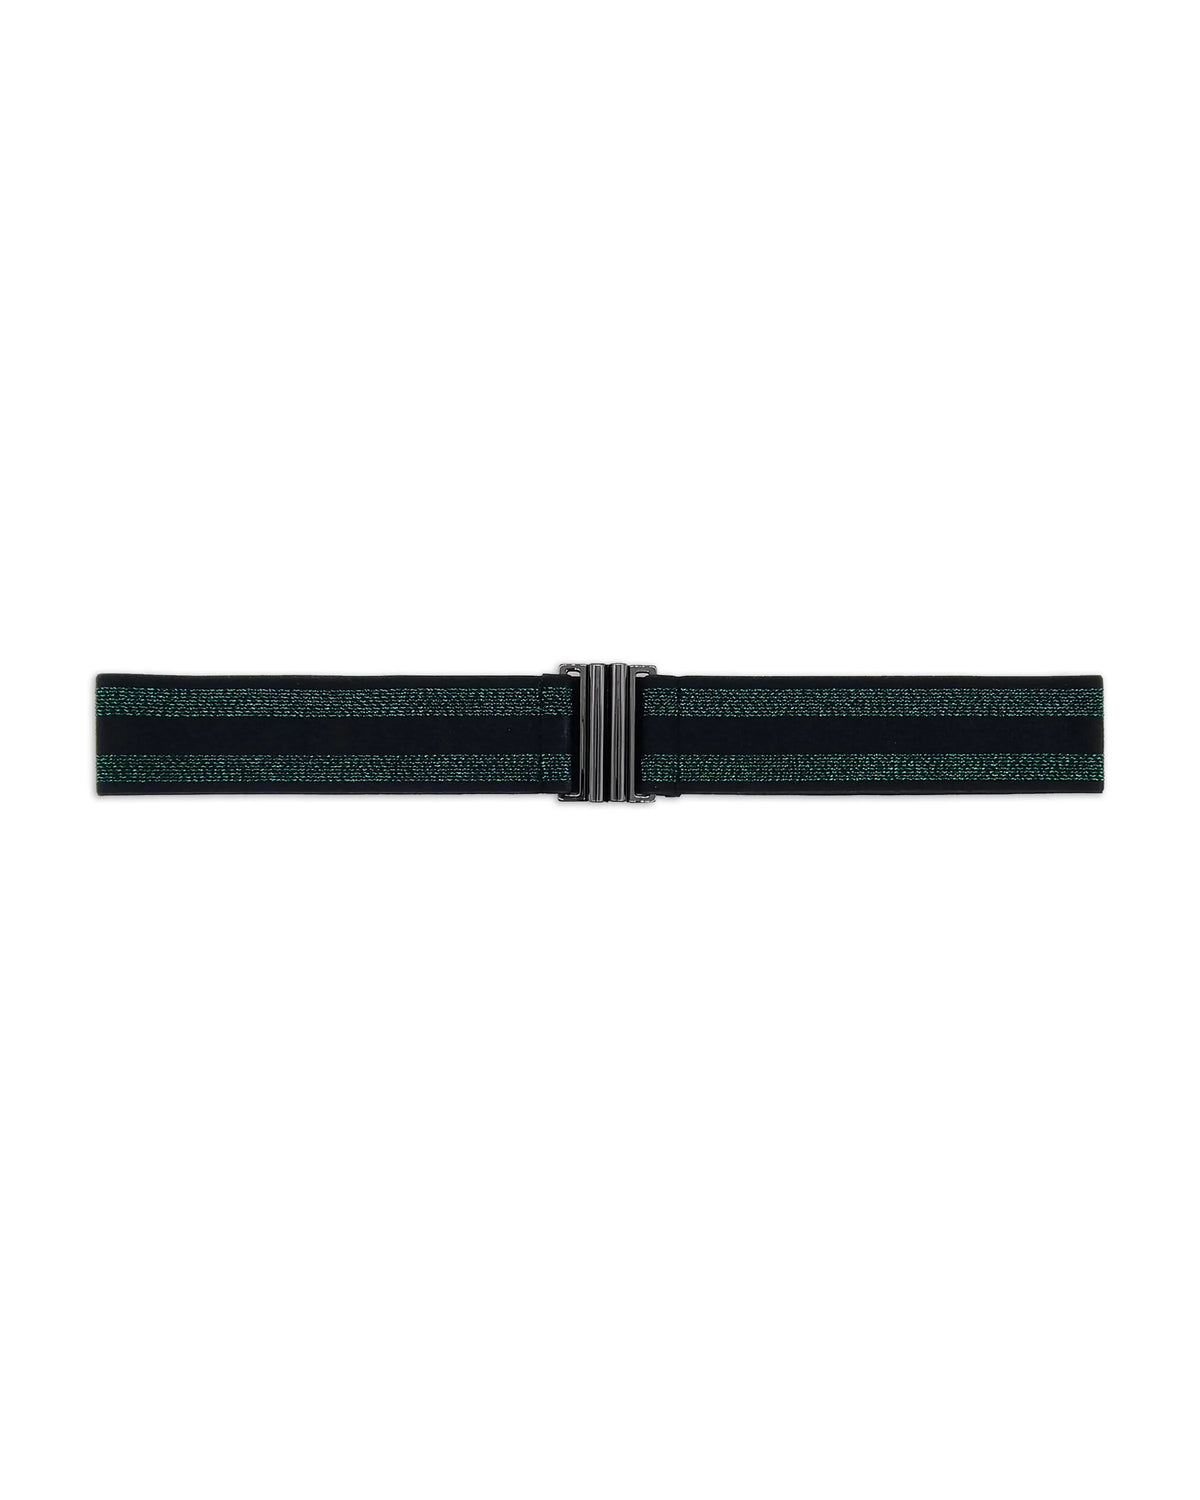 Black and metallic green elasticated belt with gun metal grey buckle